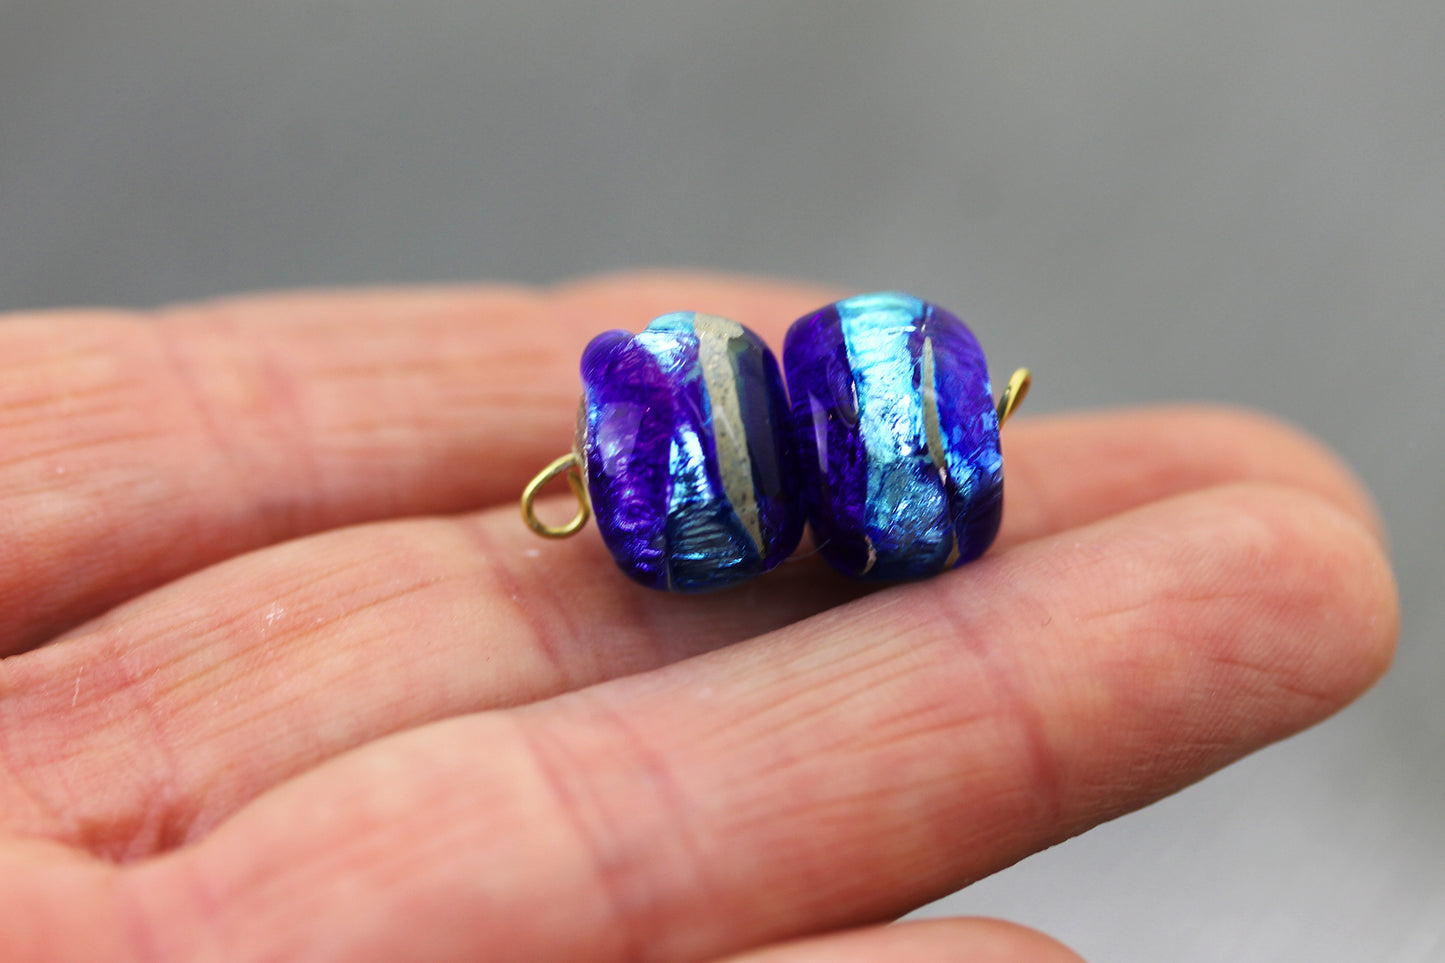 Cobalt & aqua blue Sea Rocks bead pair #224129